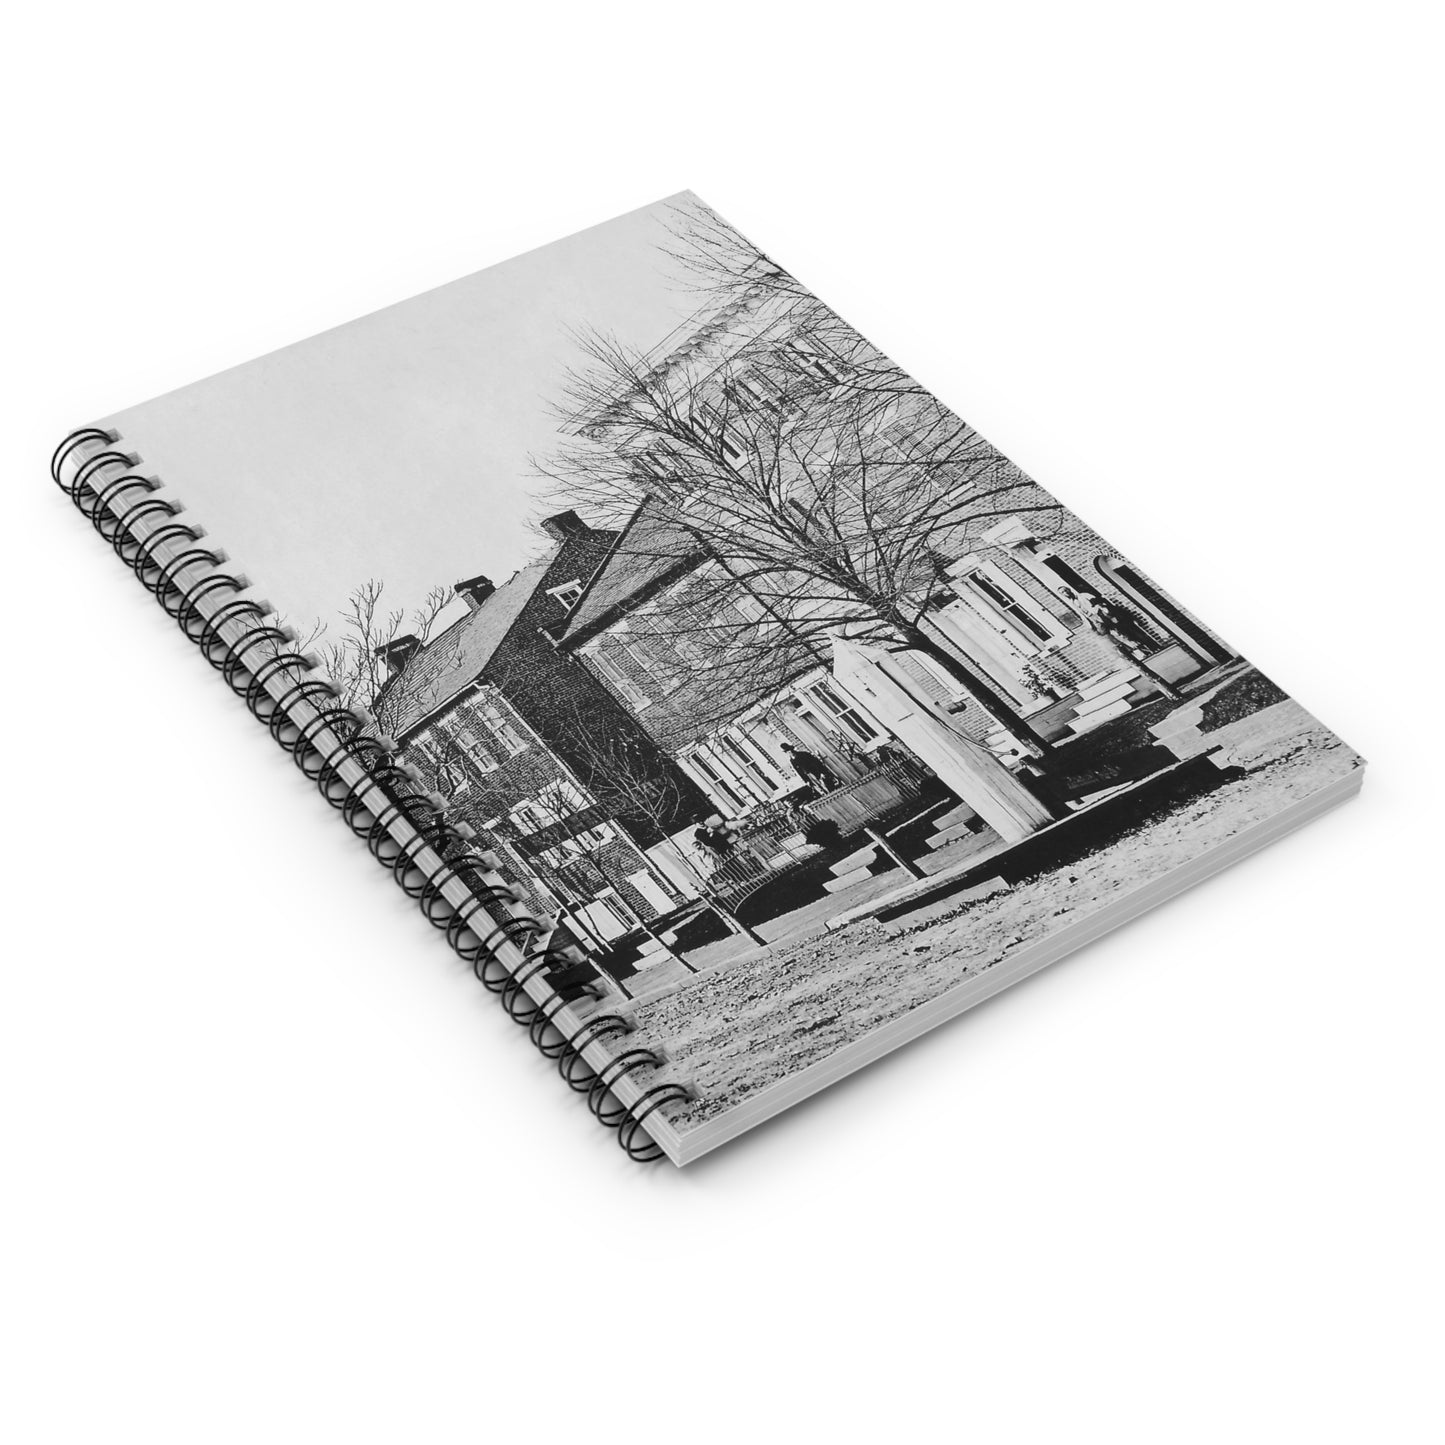 Market Square - Manheim Pennsylvania Spiral Notebook - Ruled Line